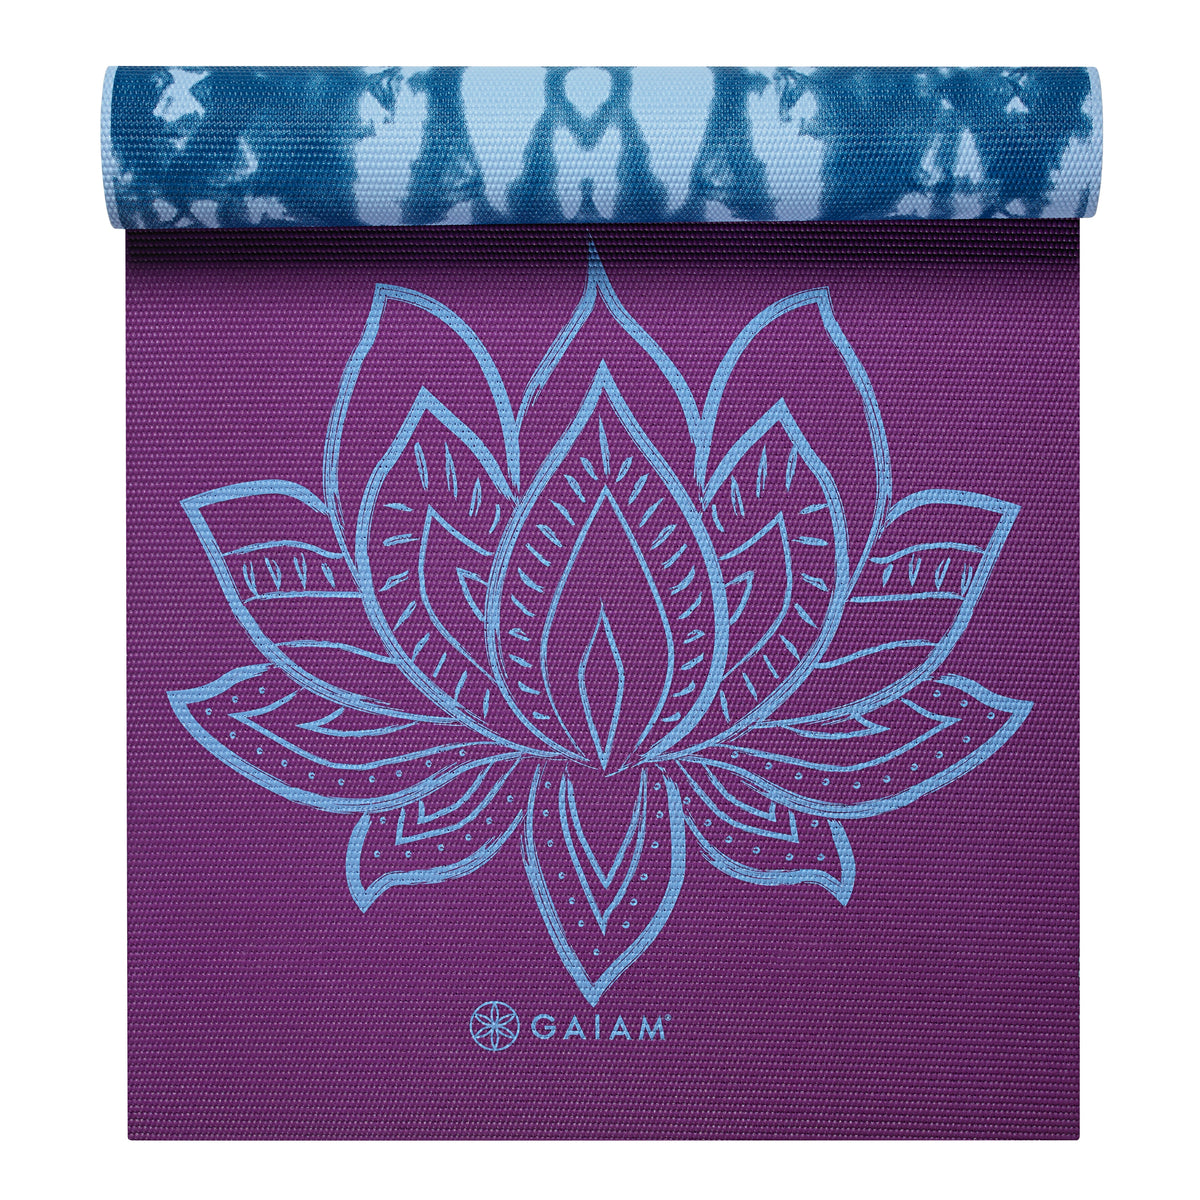 Gaiam Reversible Yoga Mat - Purple Royal Bouquet (6mm) : Target